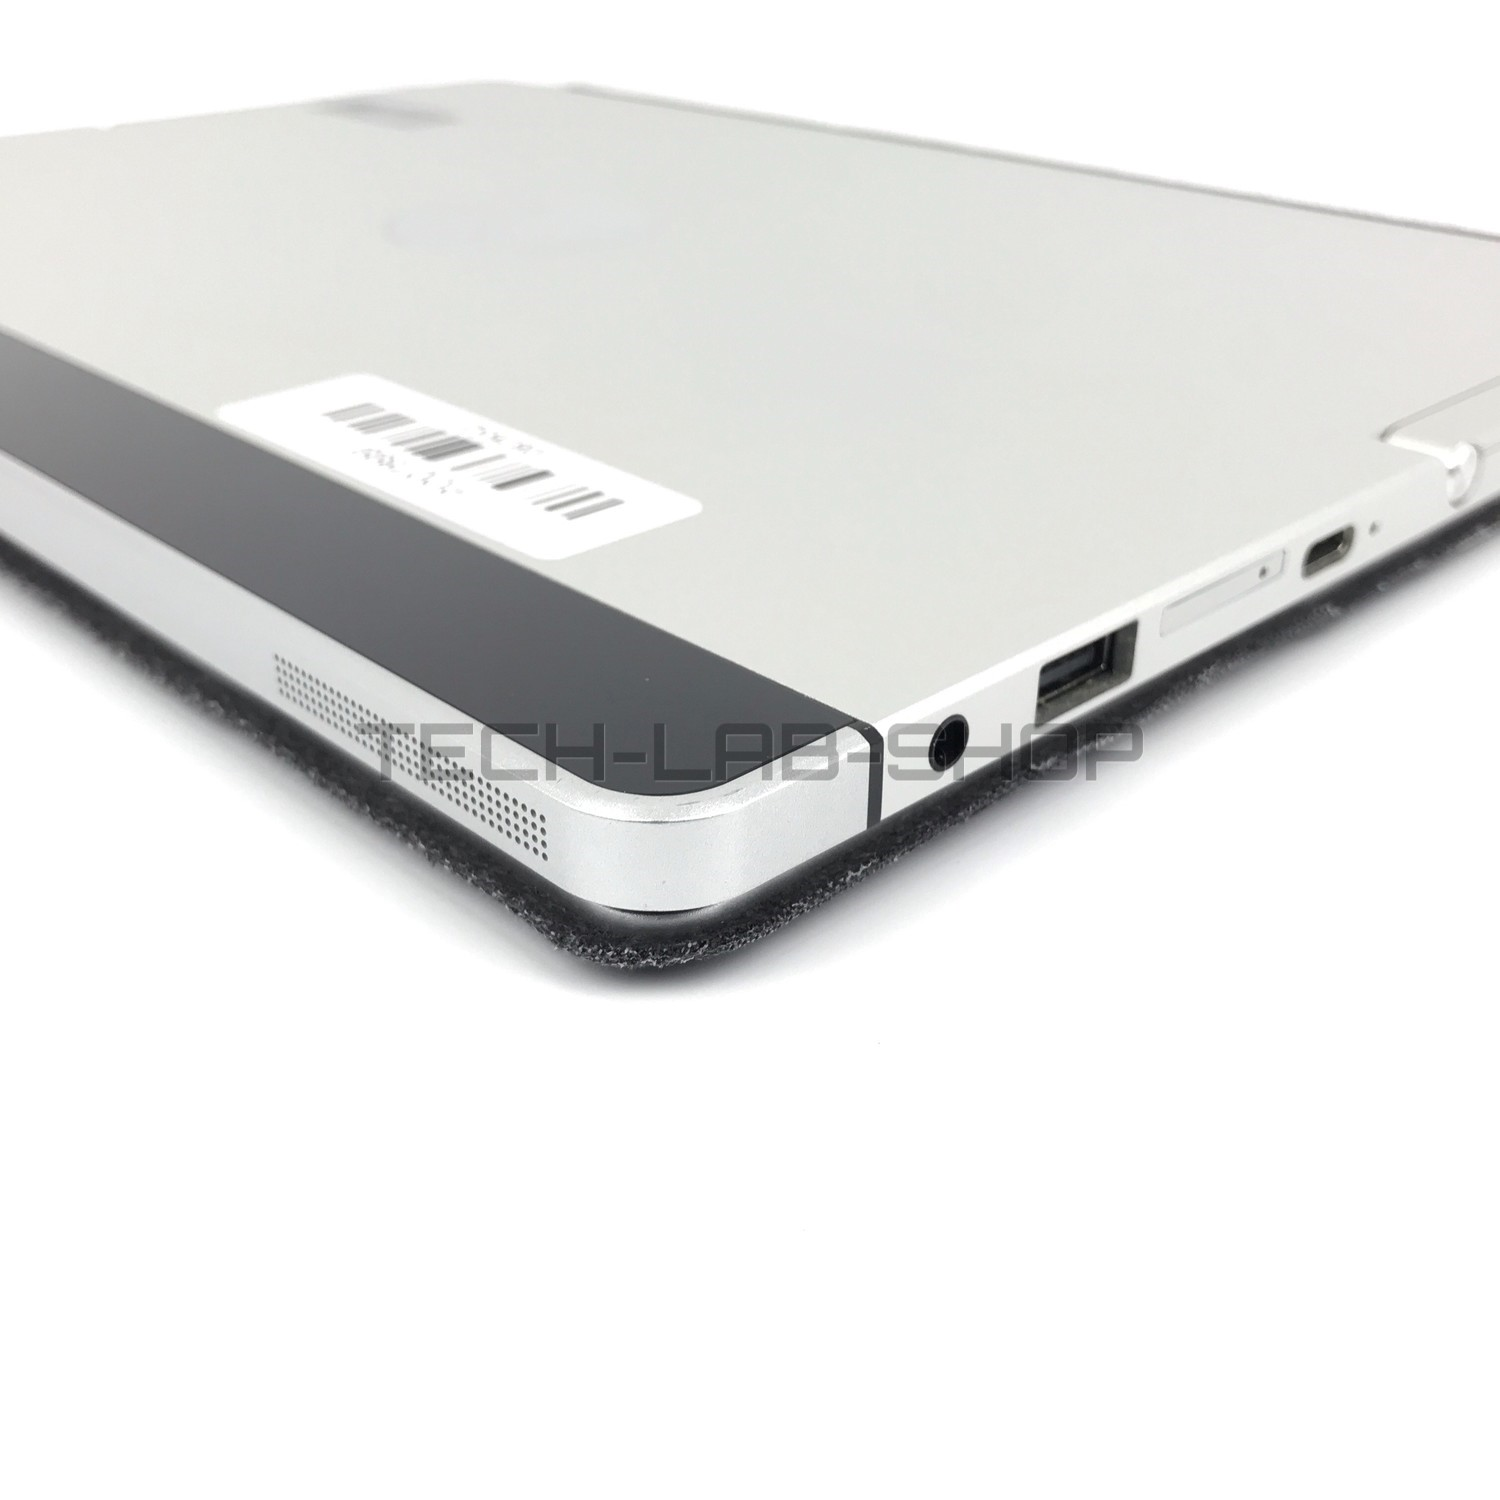 NOTEBOOK TABLET HP ELITE X2 1012 G1 12 FULL HD INTEL 8GB RAM 256GB SSD TOUCH 4G WEBCAM